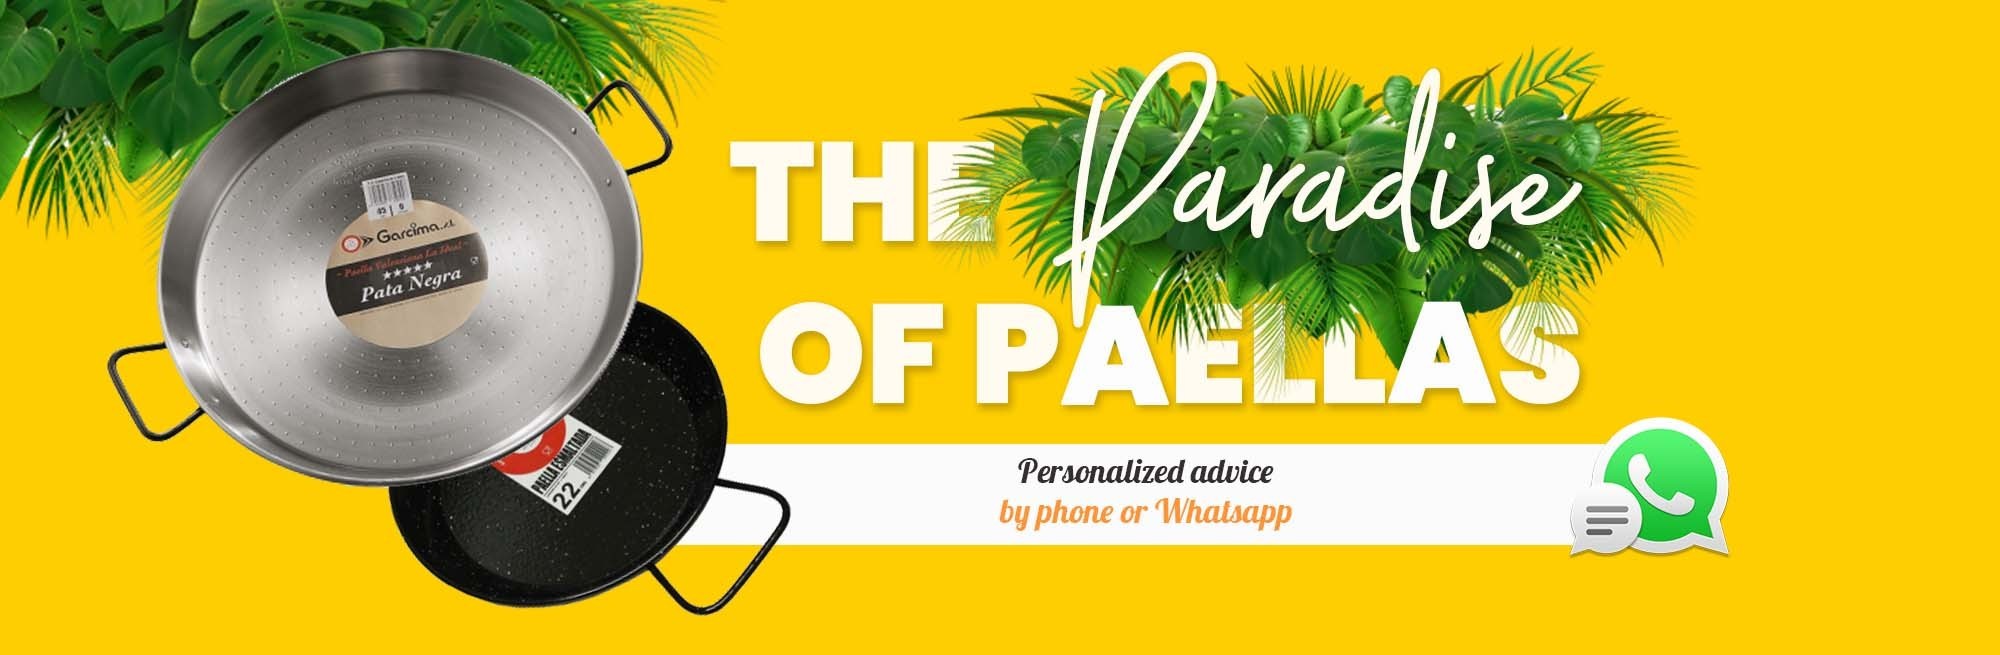 Paella paradise